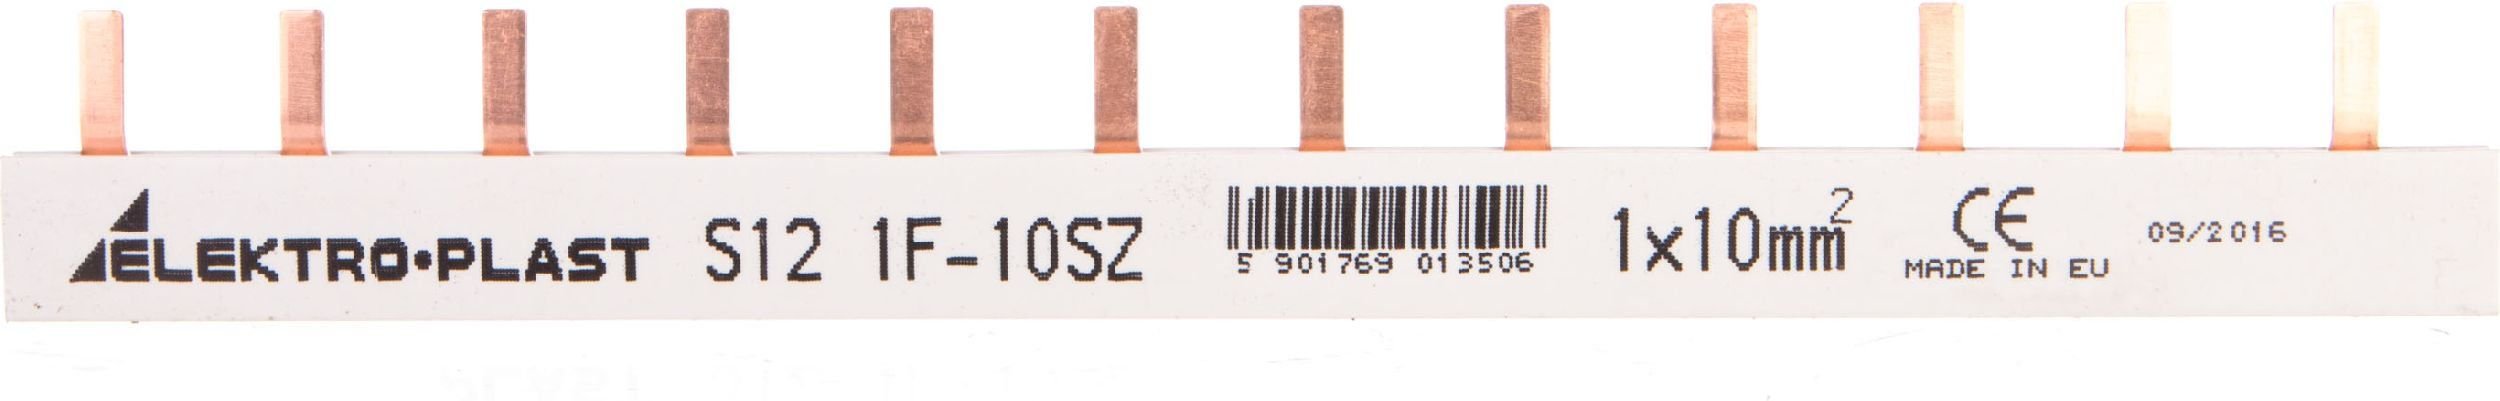 Conductor șină tip PIN 3P 16mm2 100A pini 12 IZS16 / 3F / 12 / D (45282)